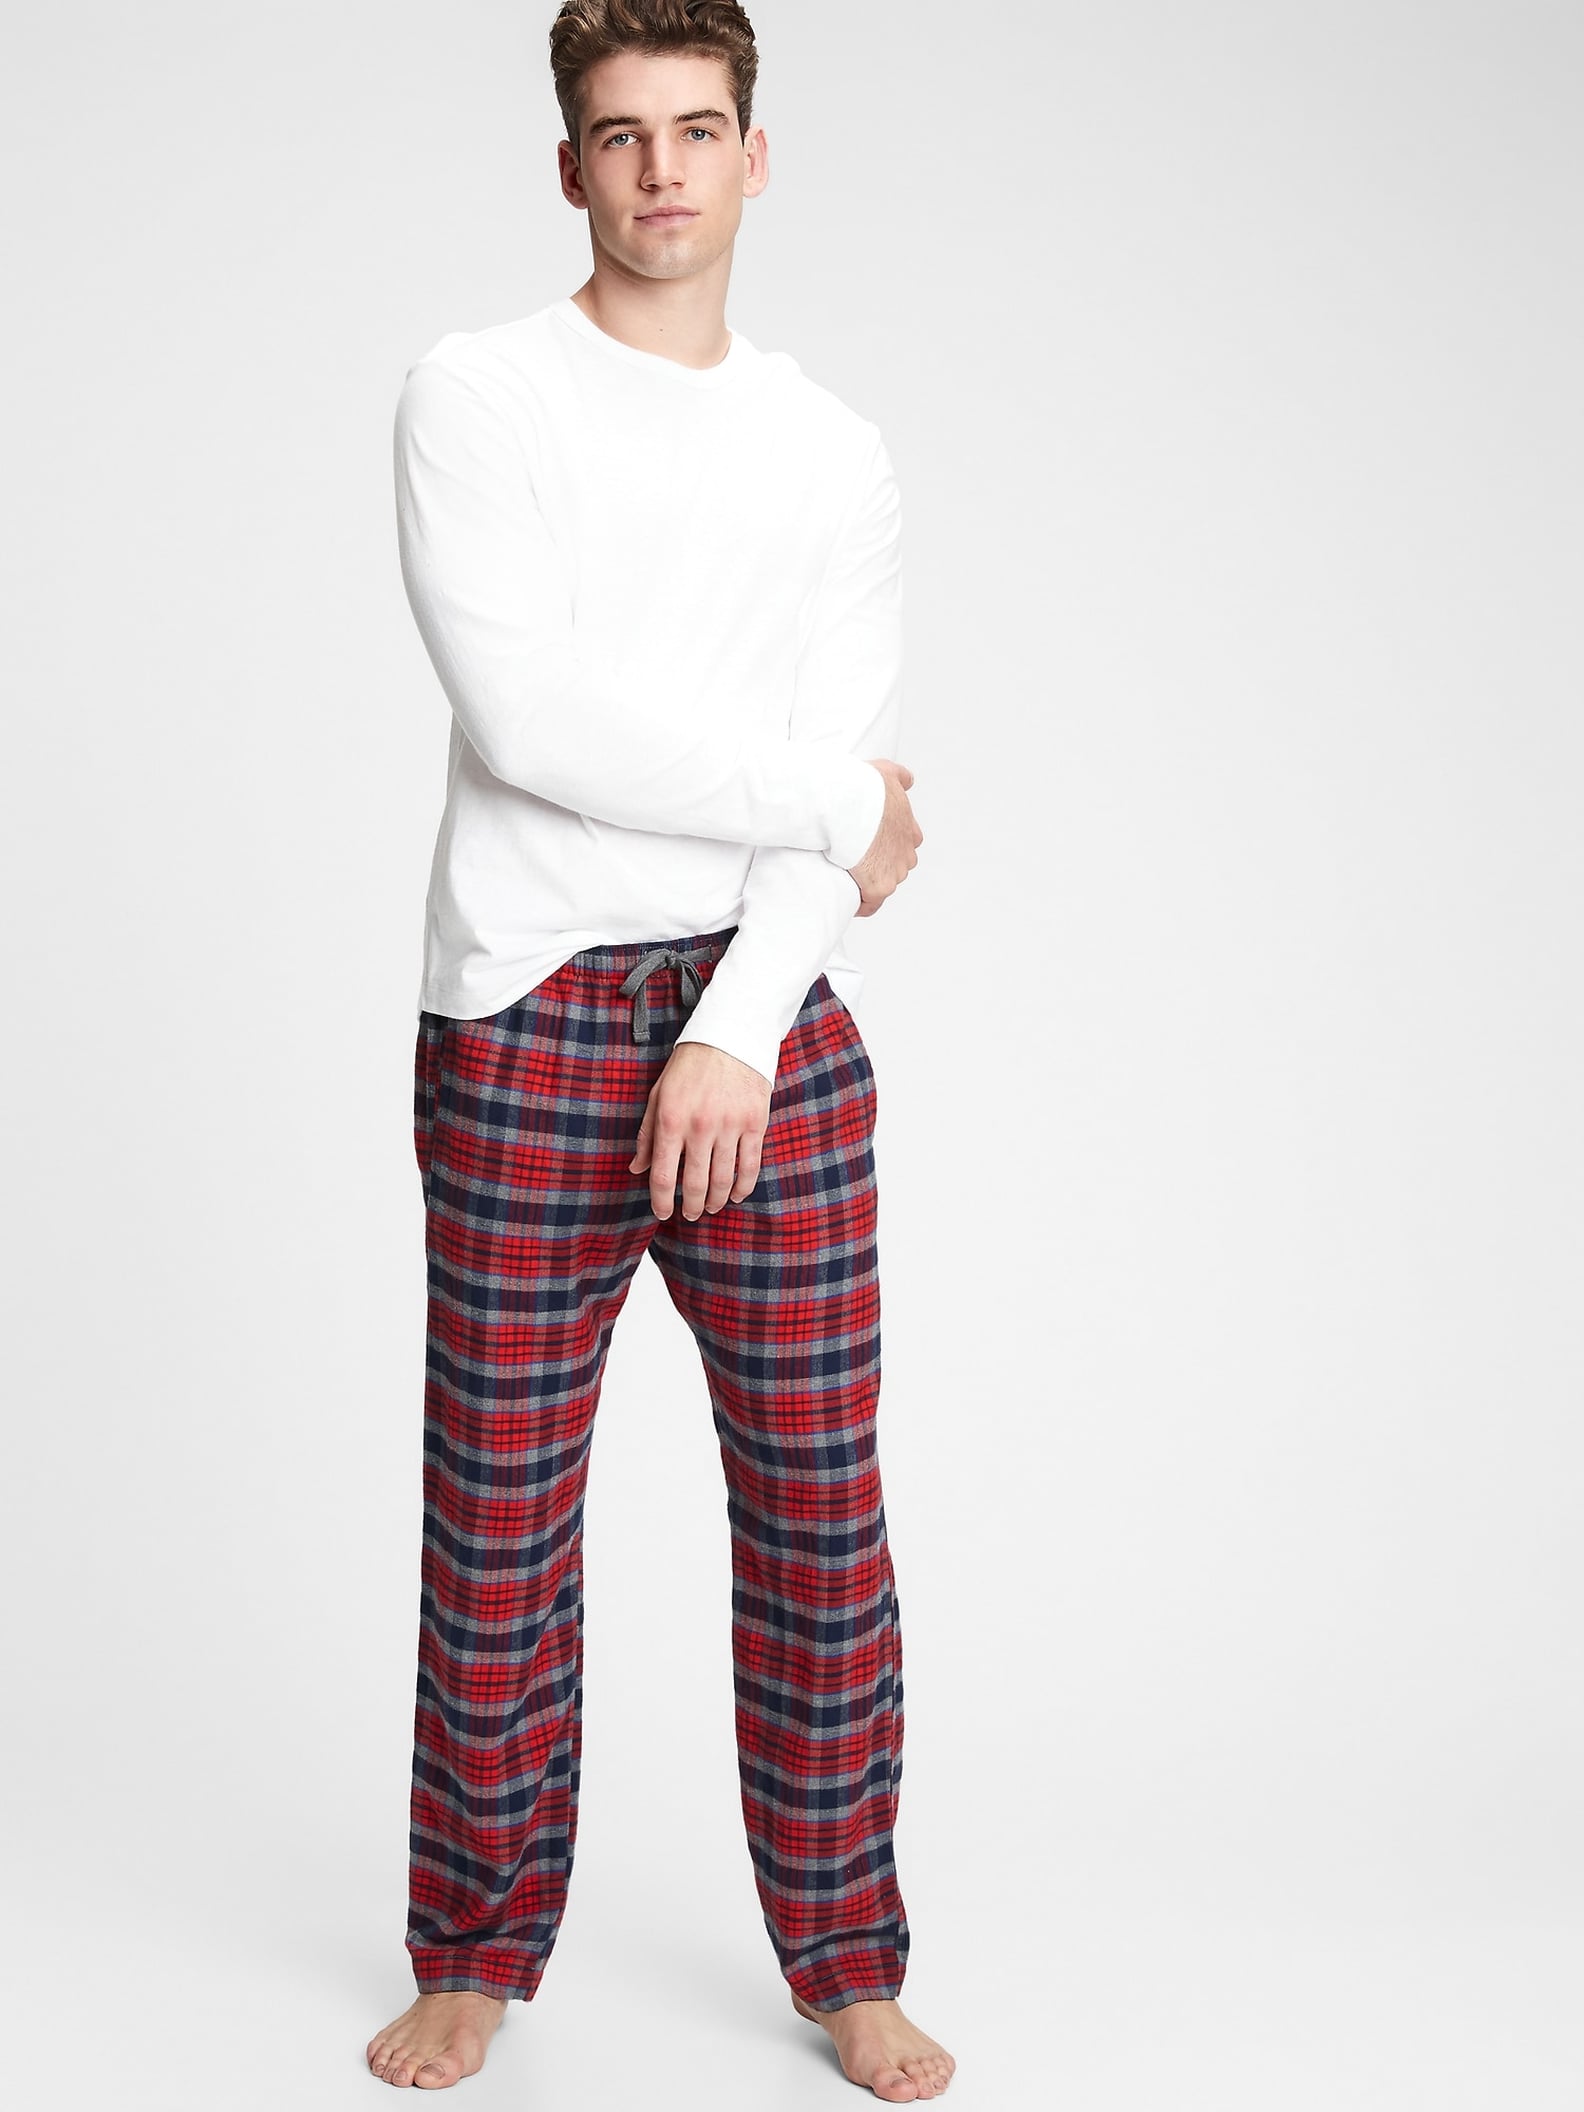 Best Gap Pajamas on Sale | POPSUGAR Fashion